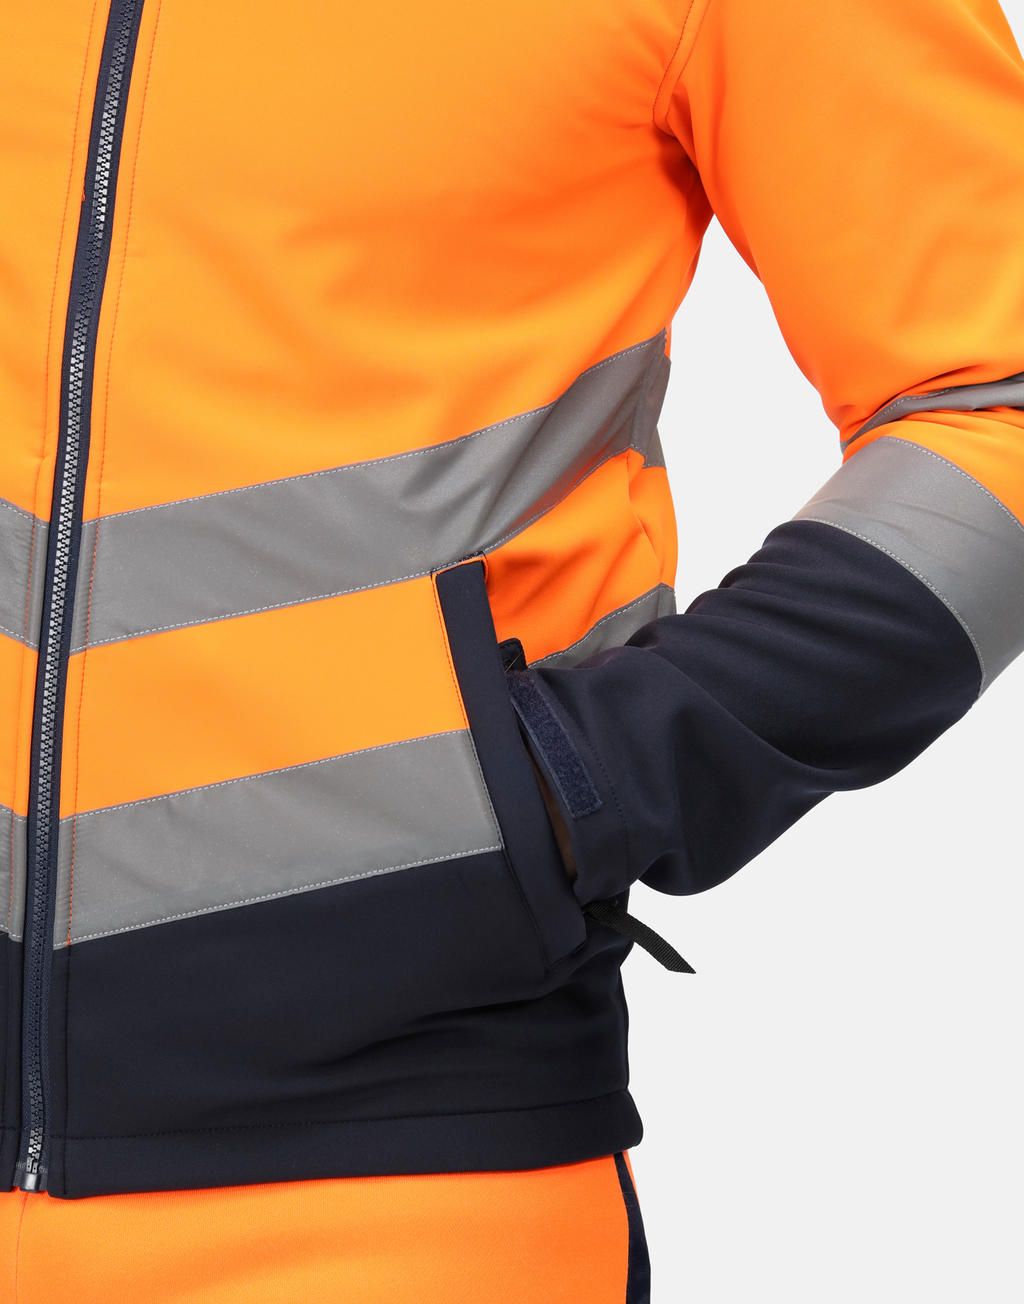  Pro Hi Vis Softshell Jacket in Farbe Orange/Navy